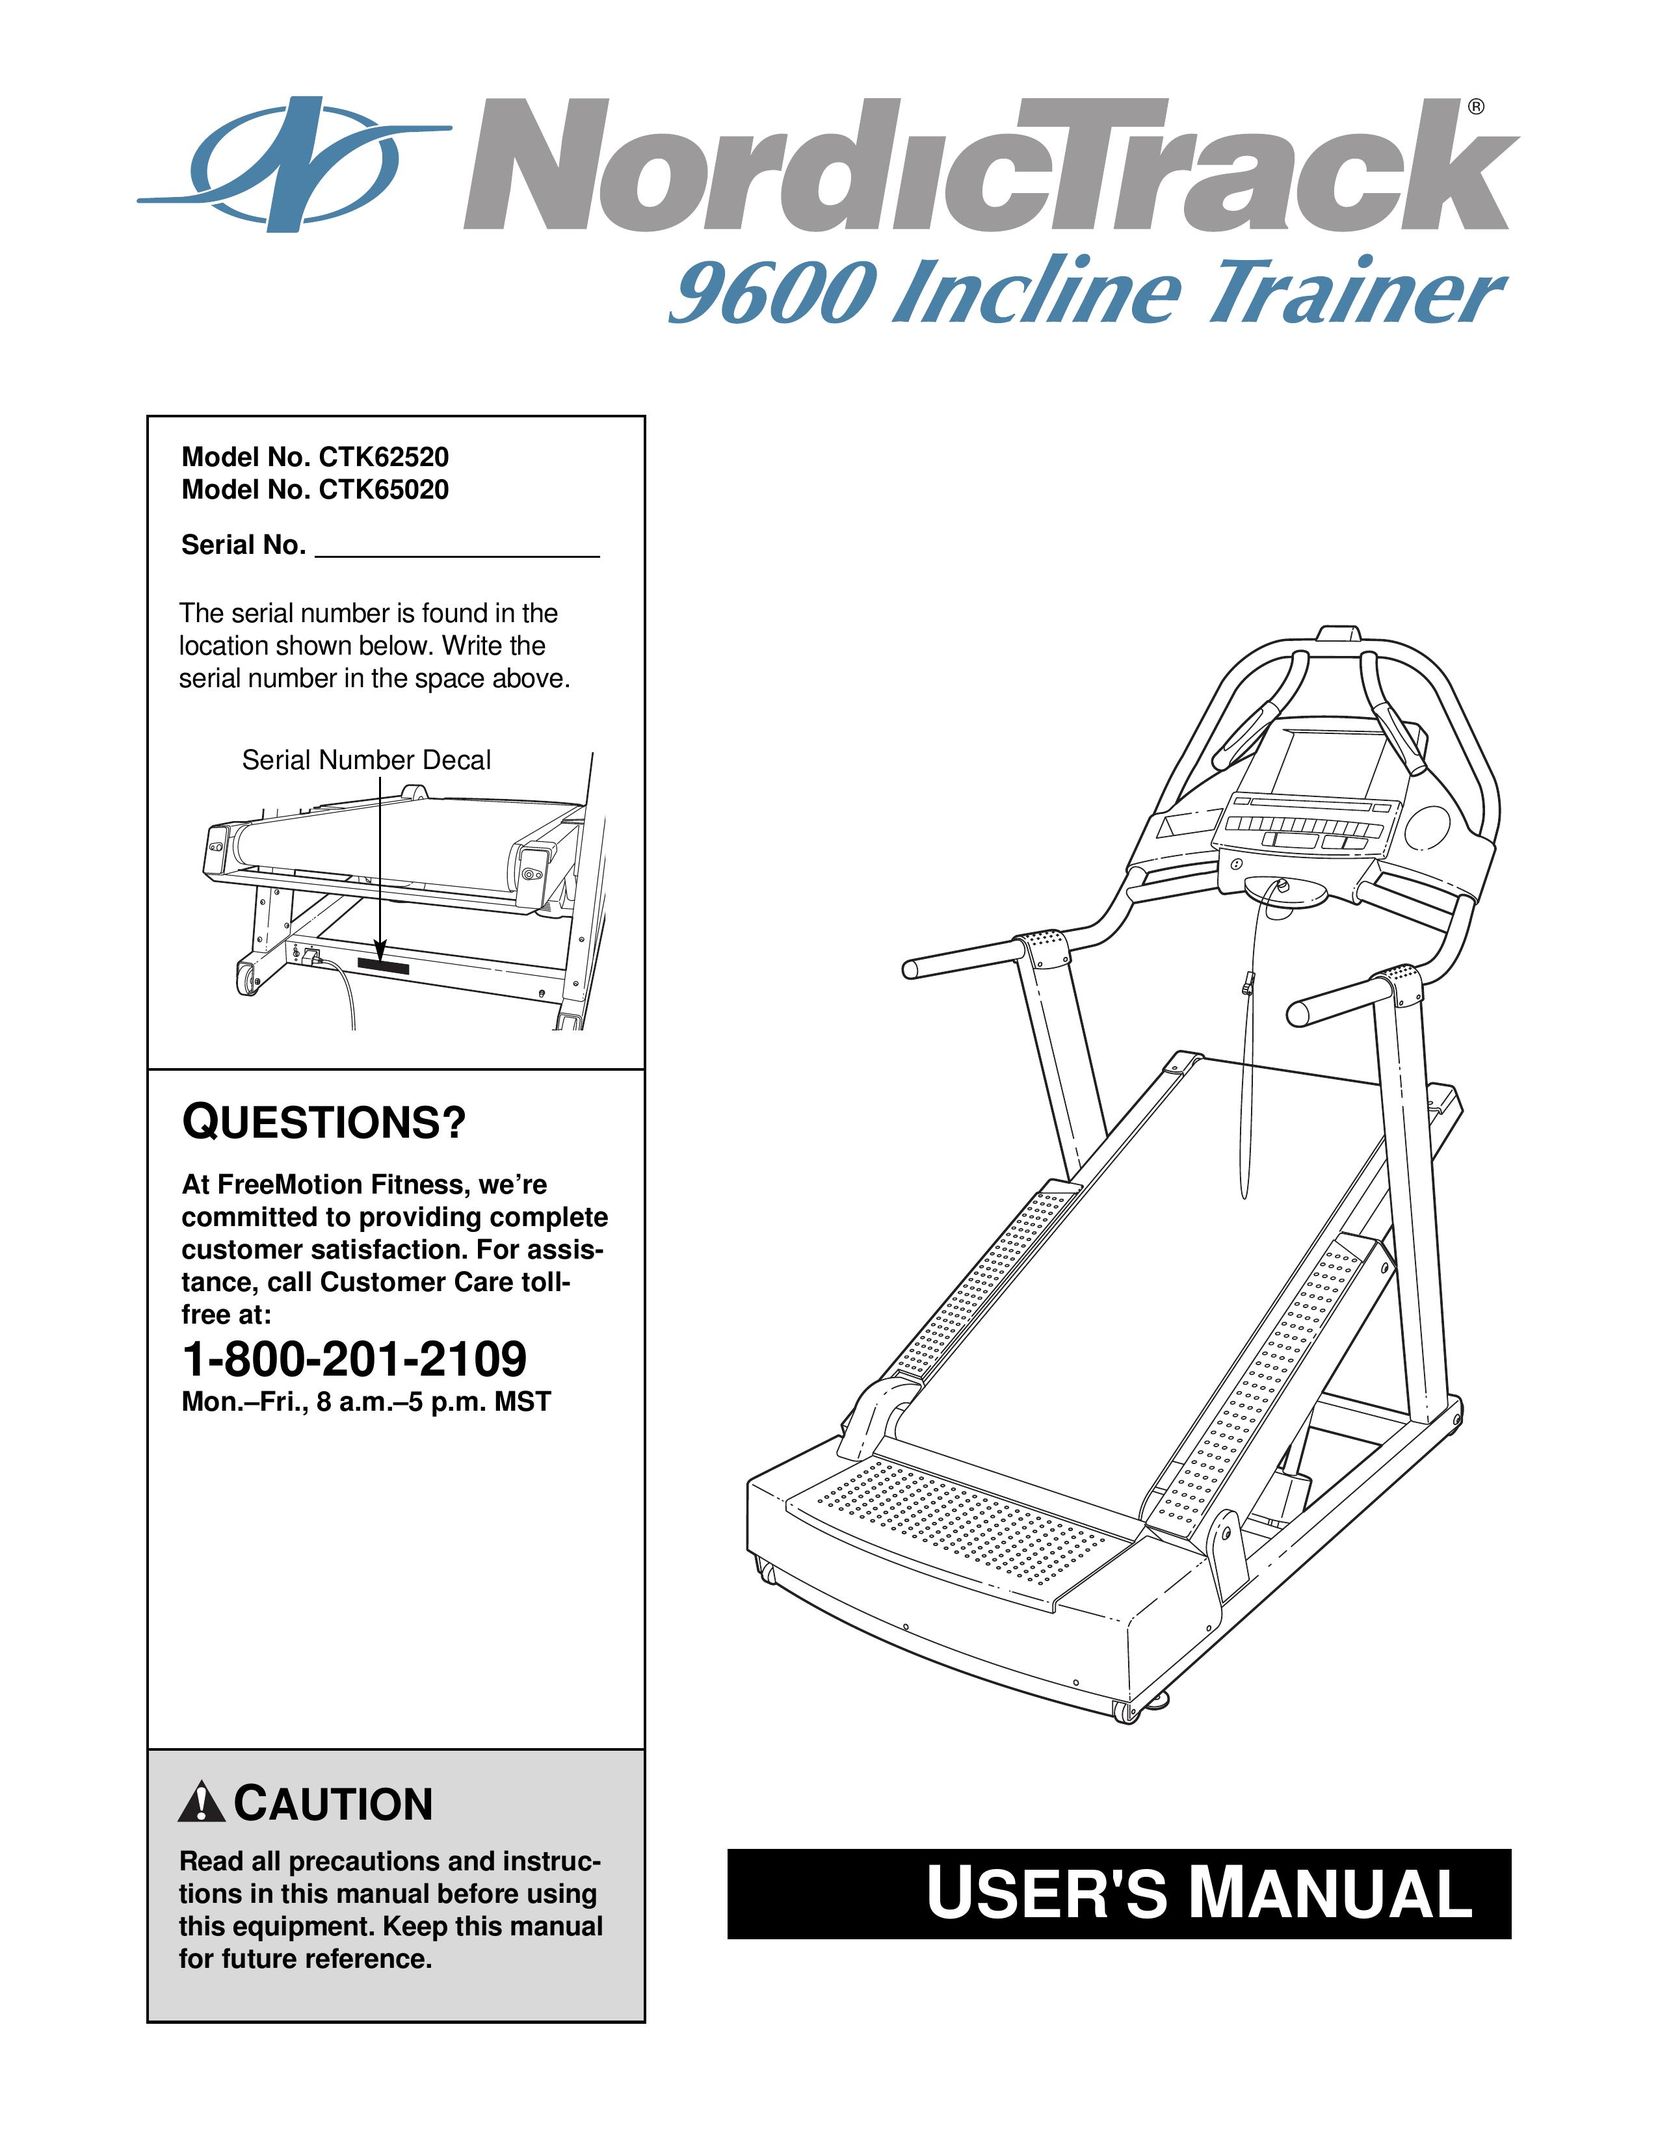 NordicTrack CTK65020 Home Gym User Manual